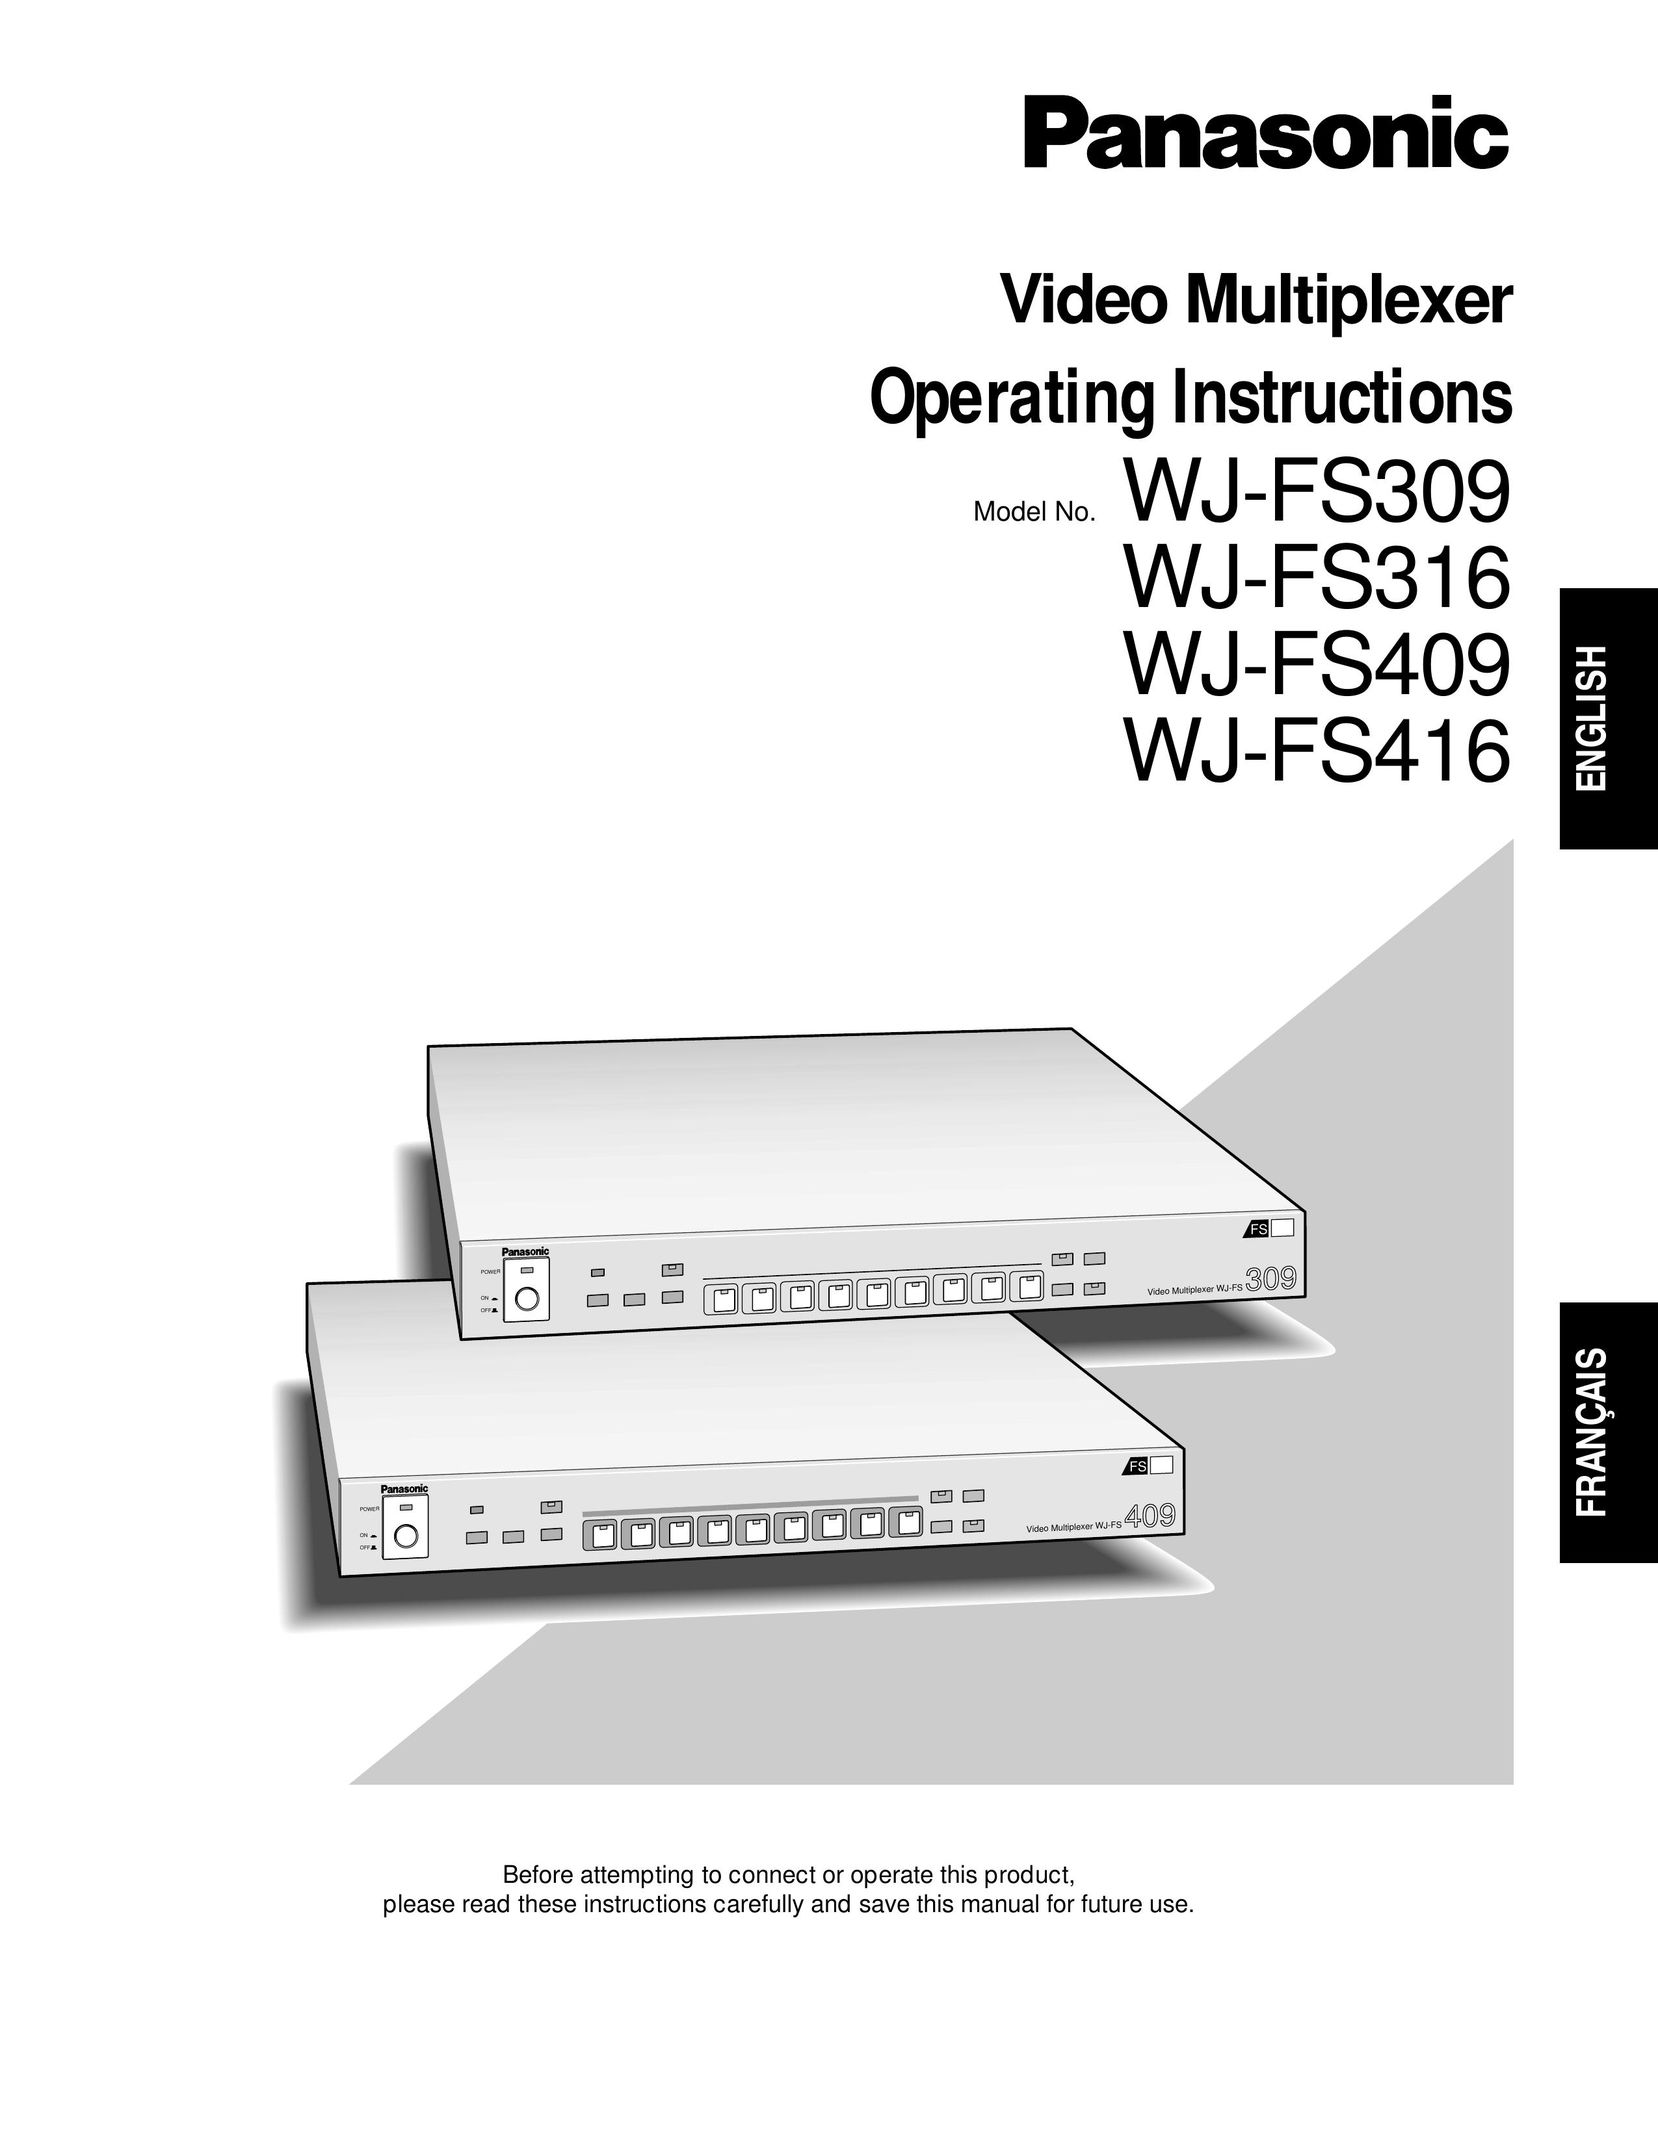 Panasonic WJ-FS416 Home Theater Server User Manual